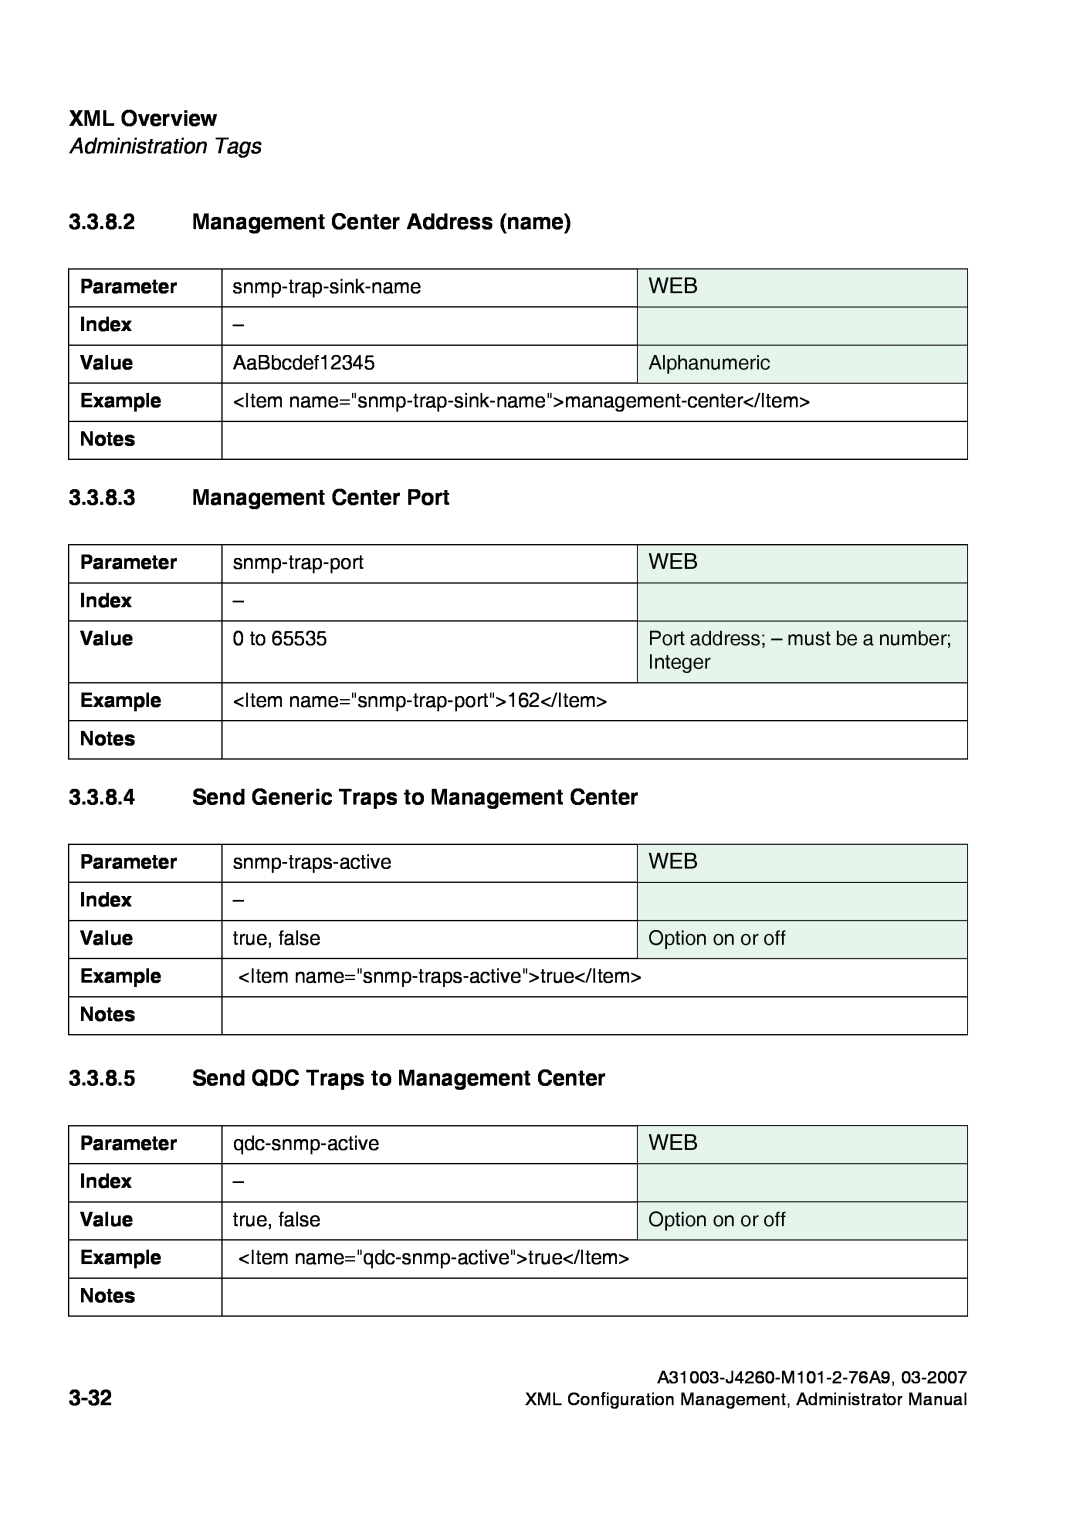 Siemens 420 S V6.0 Management Center Address name, Management Center Port, Send Generic Traps to Management Center, 3-32 